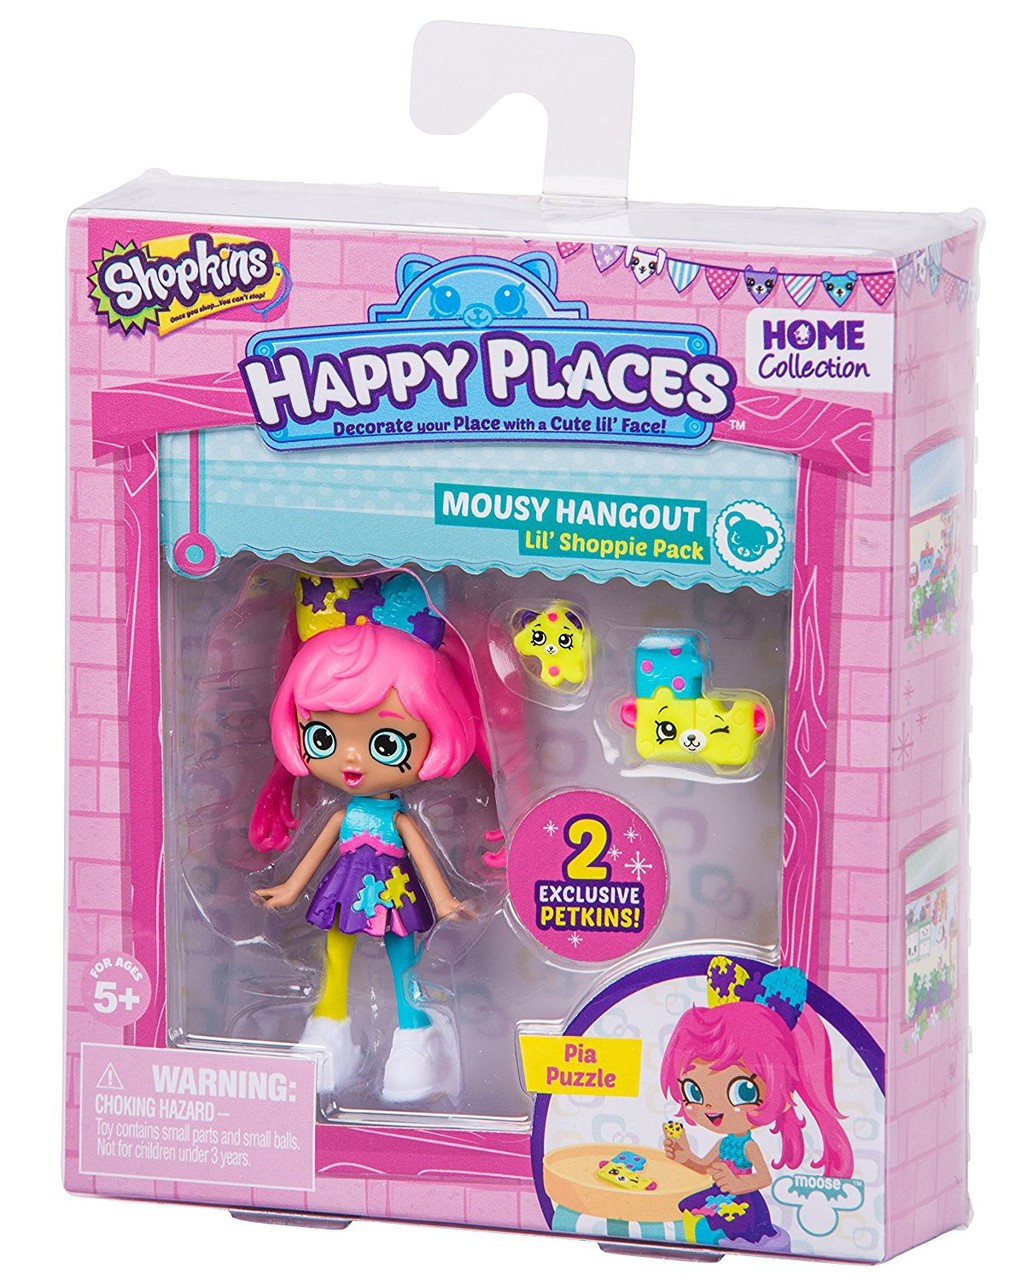 Shopkins Happy Places Series 2 Pia Puzzle Lil Shoppie Pack 119 120 Mousy Hangout Moose Toys Toywiz - h squads hangout roblox